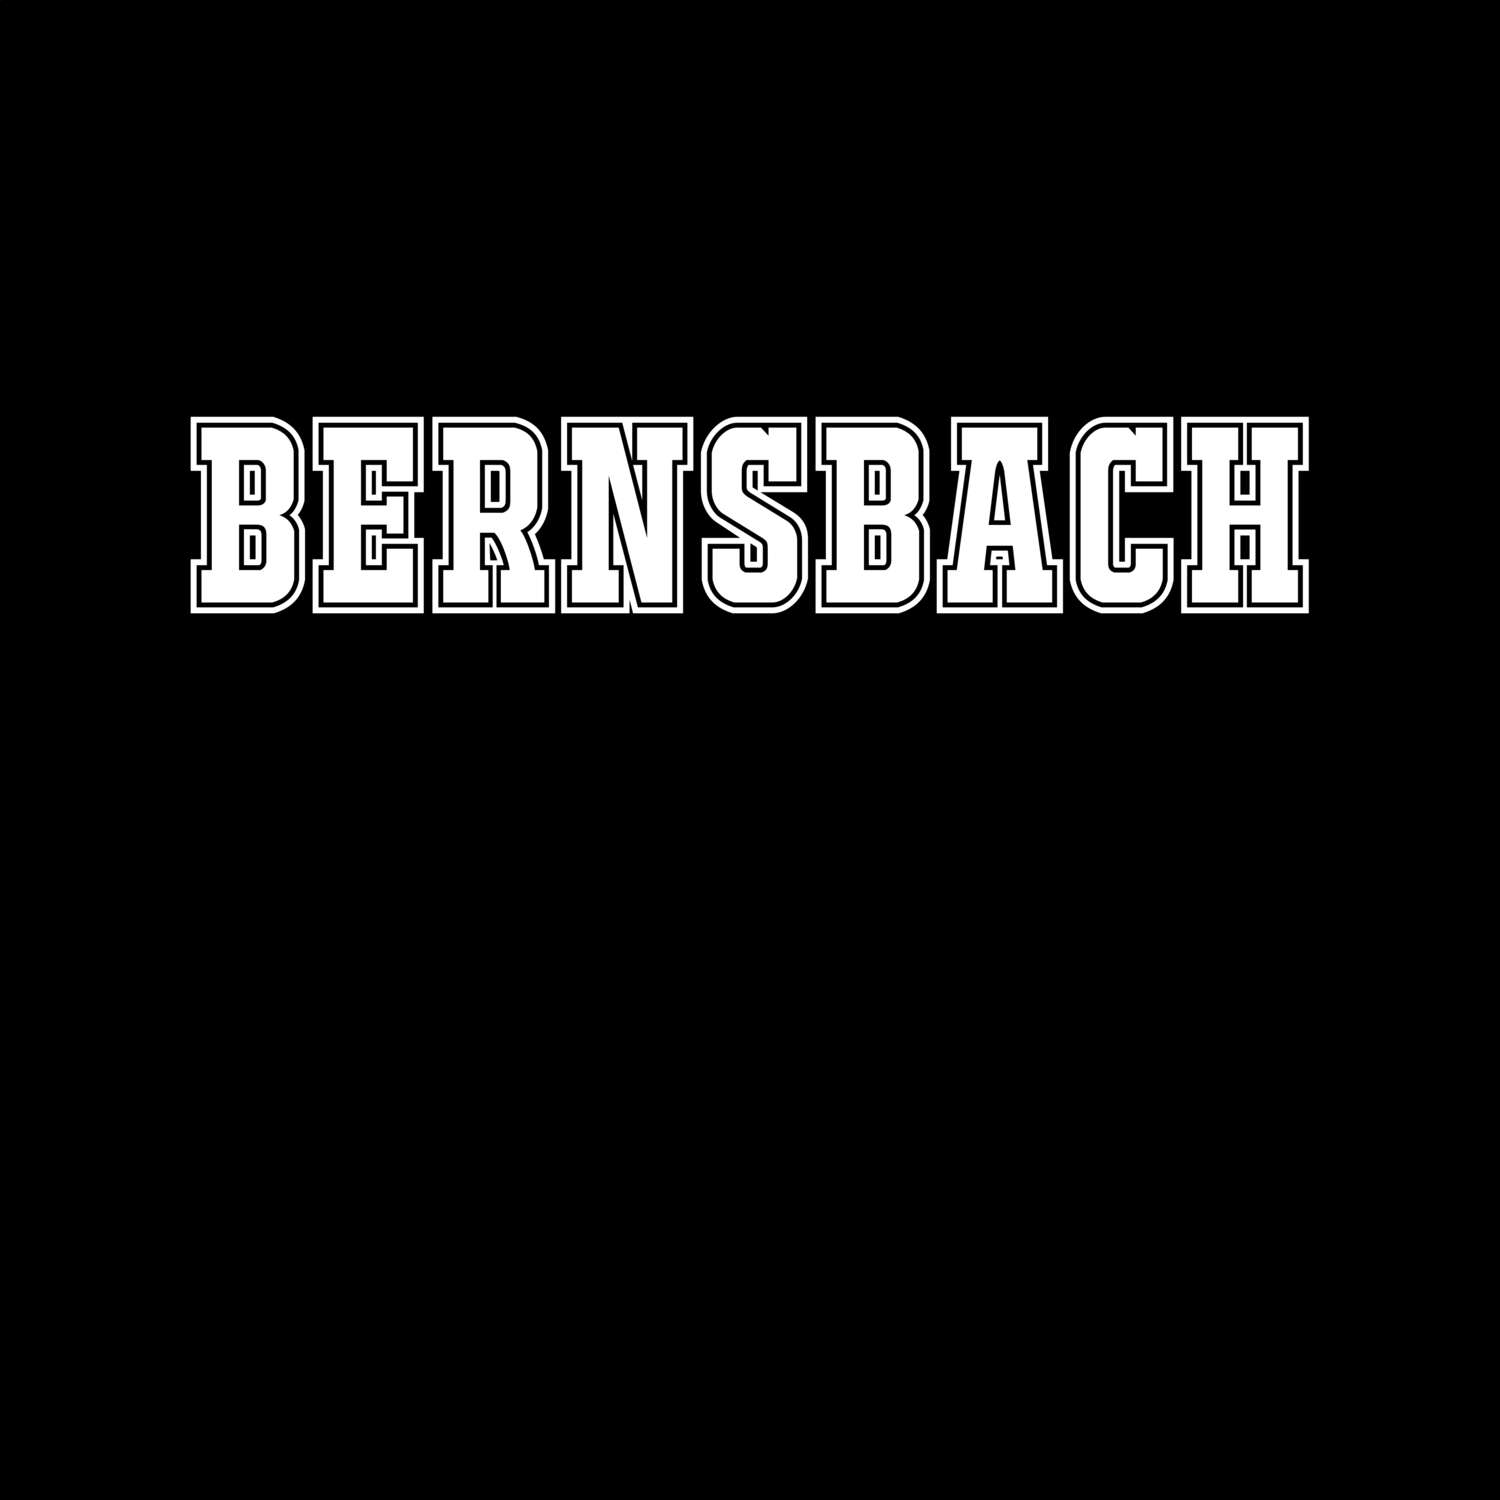 Bernsbach T-Shirt »Classic«